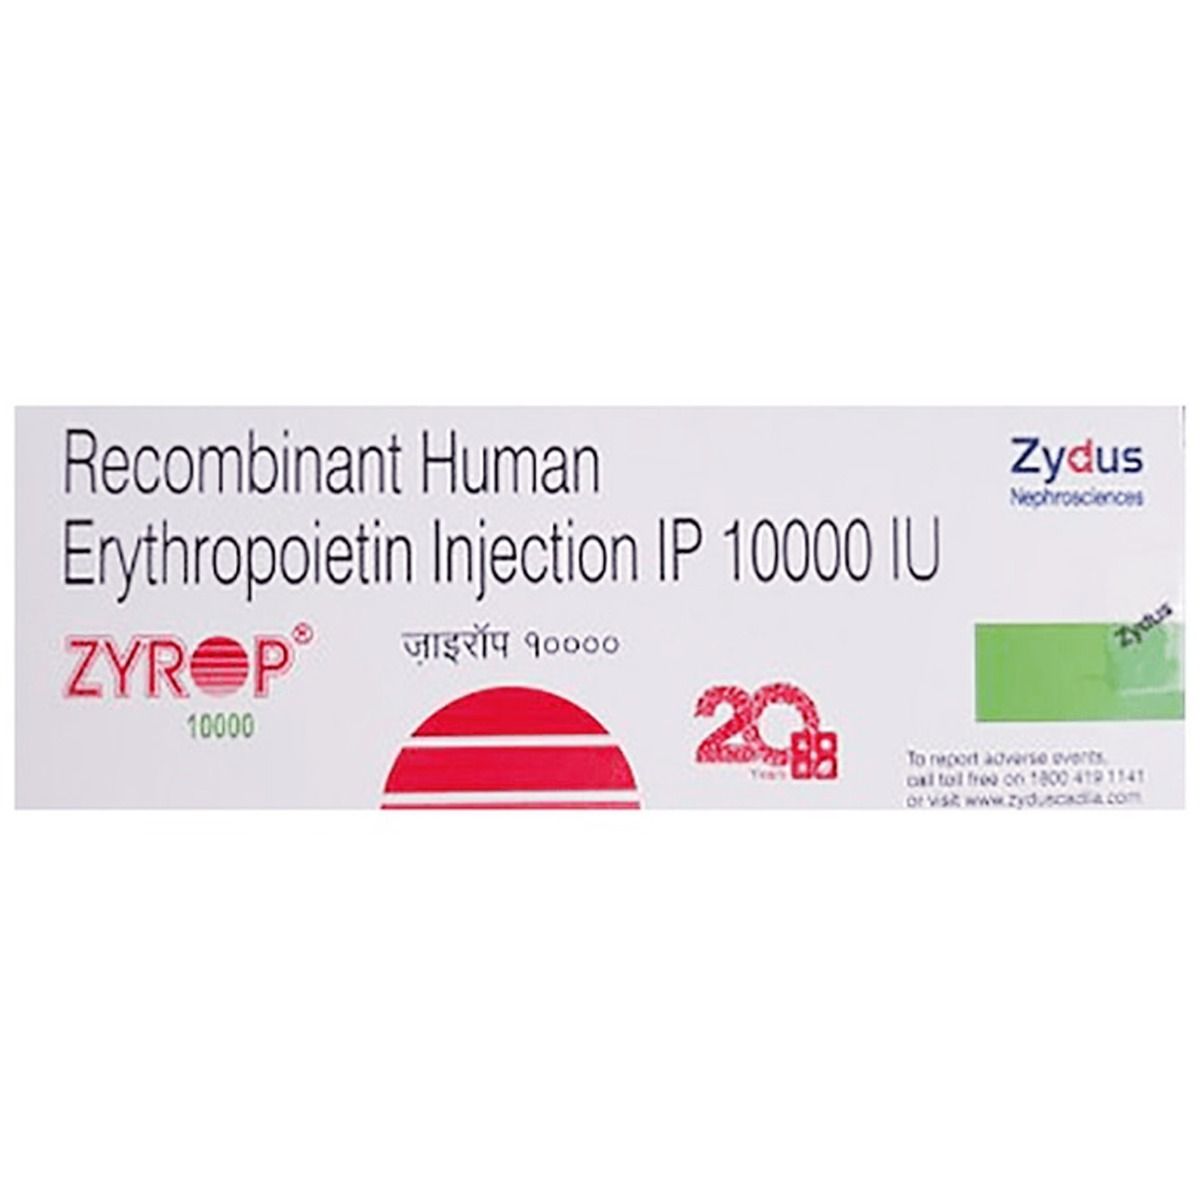 Buy Zyrop 10000 Injection 1's Online